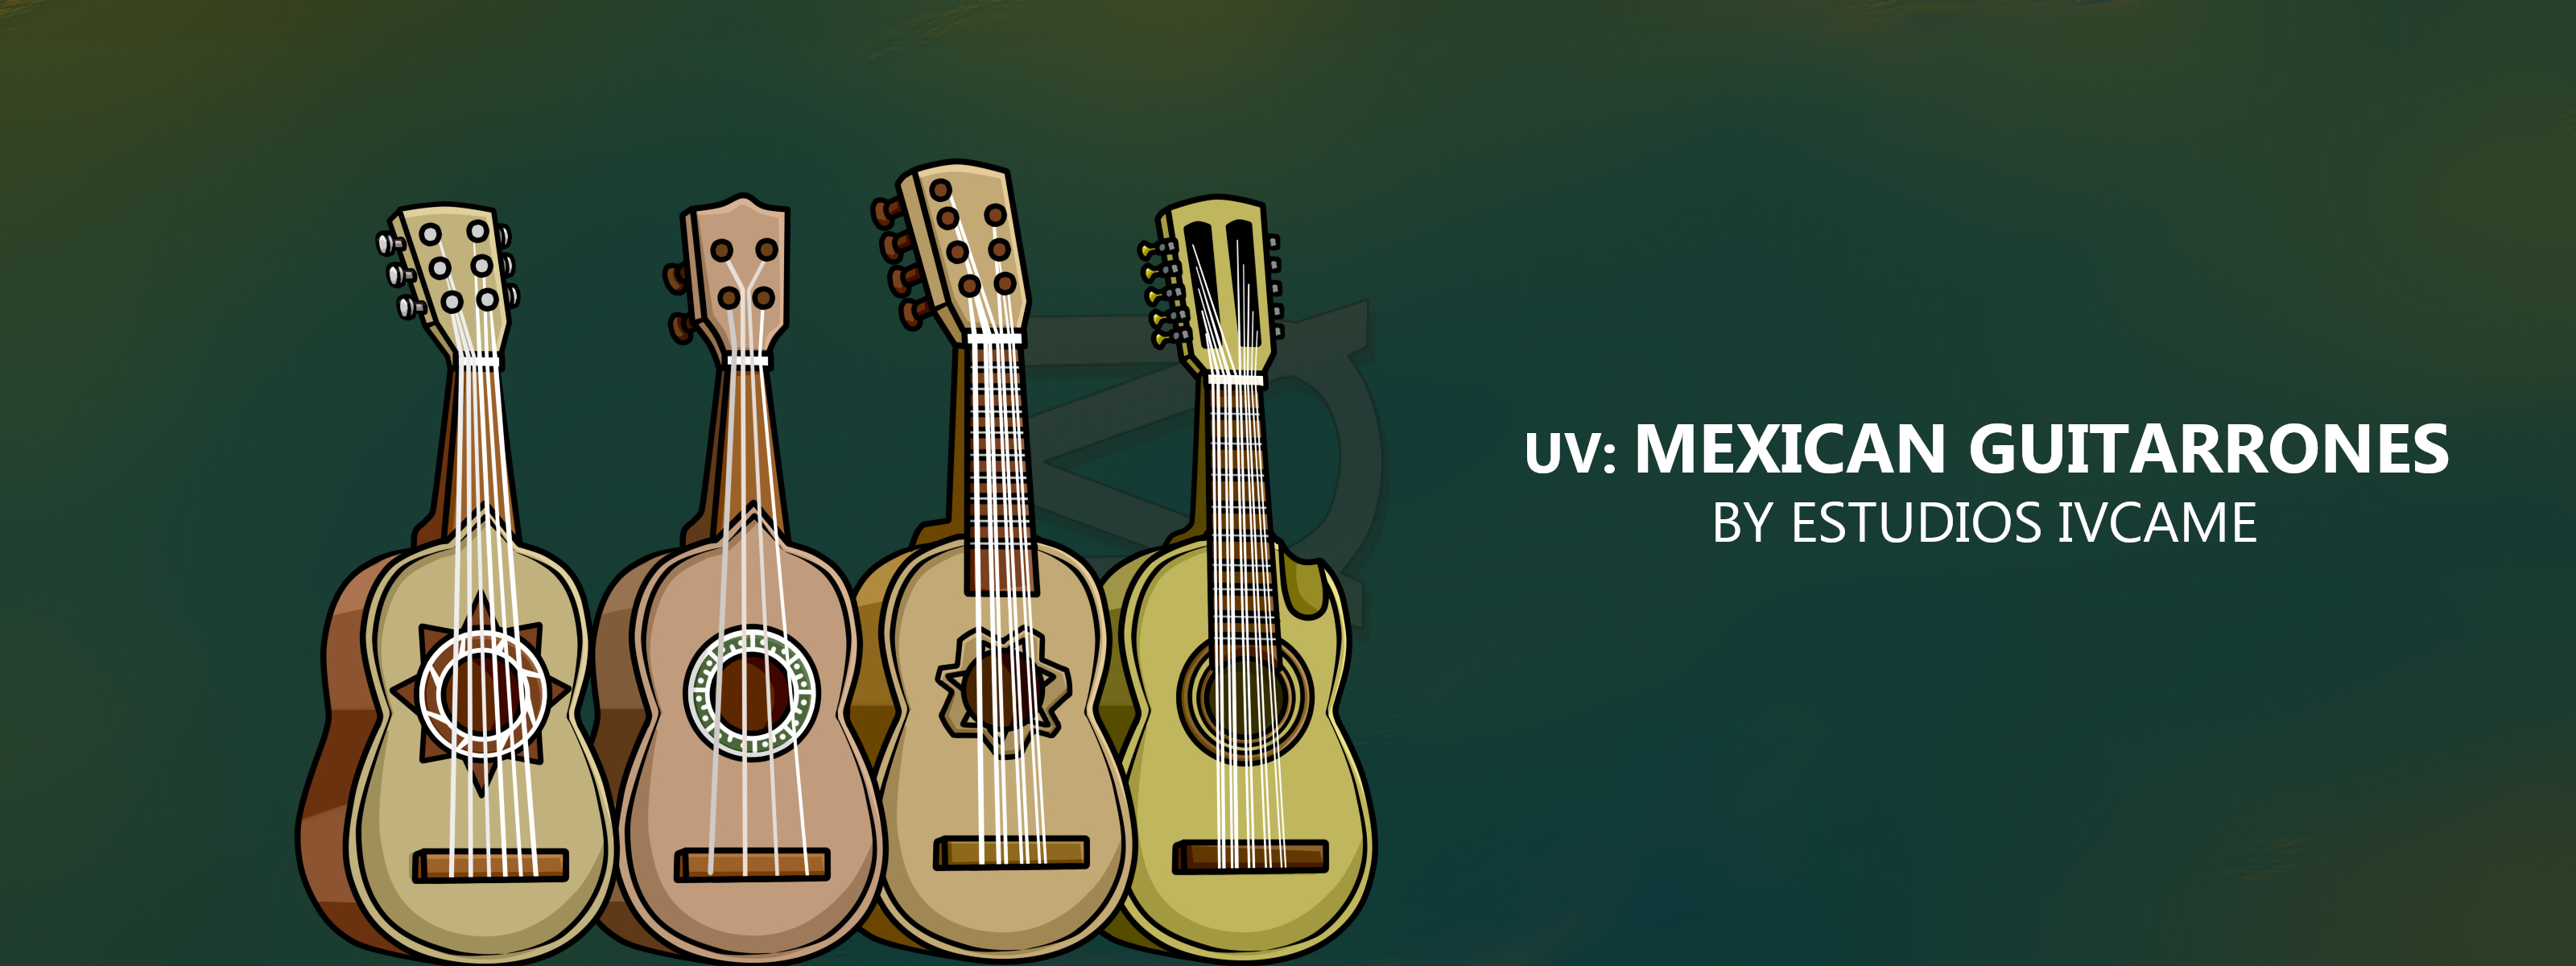 UV Mexican Guitarrones VST Plugin for Decent Sampler